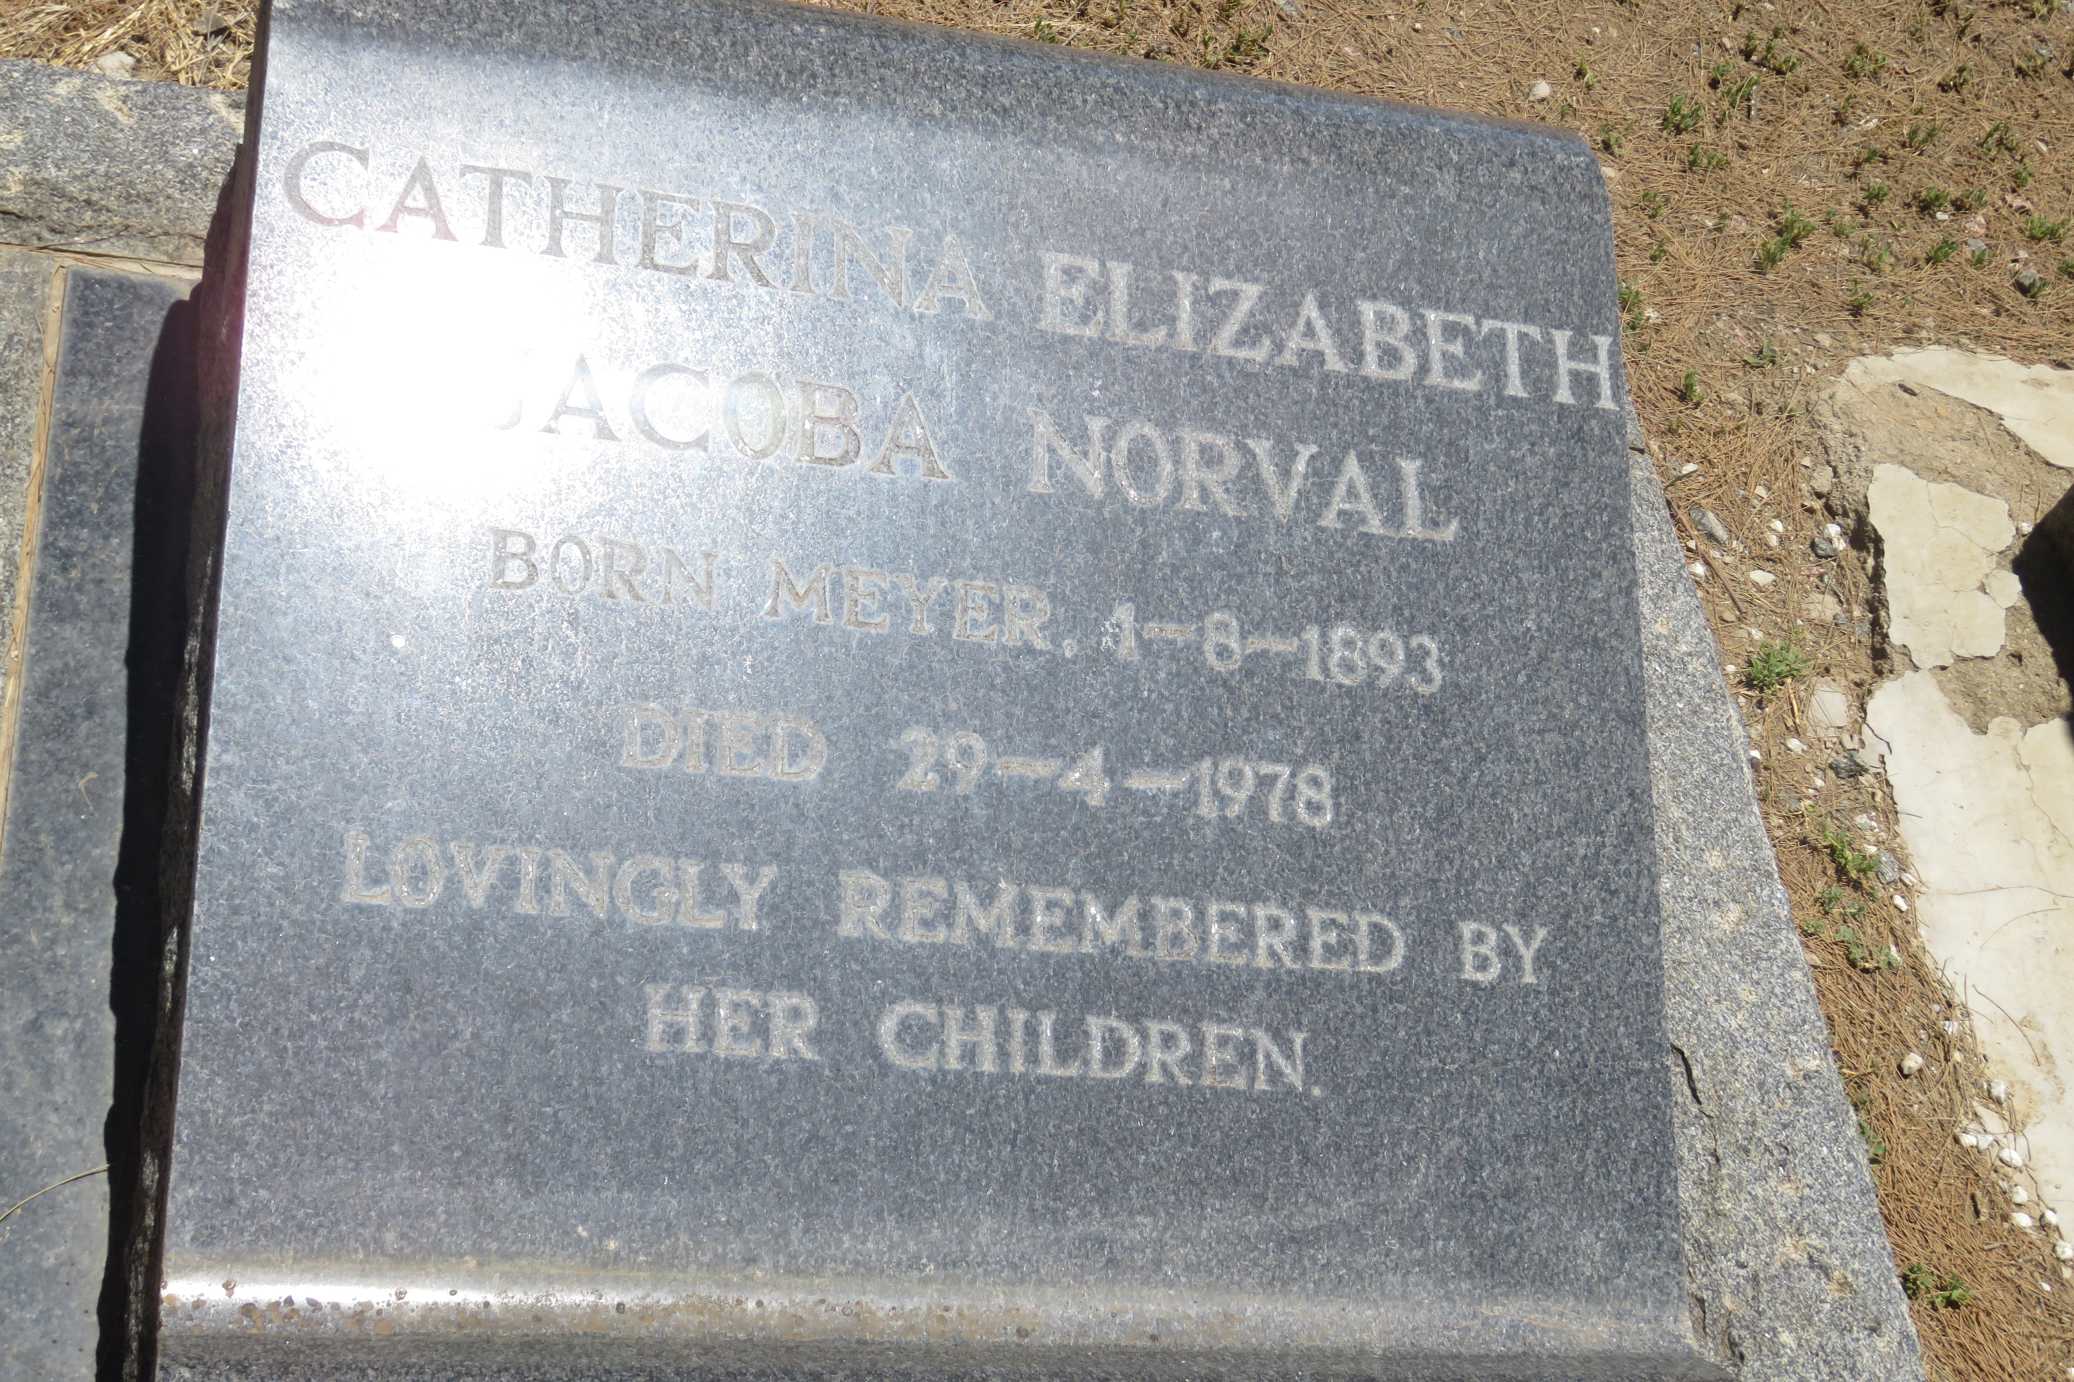 NORVAL Catherina Elizabeth Jacoba nee MEYER 1893-1978